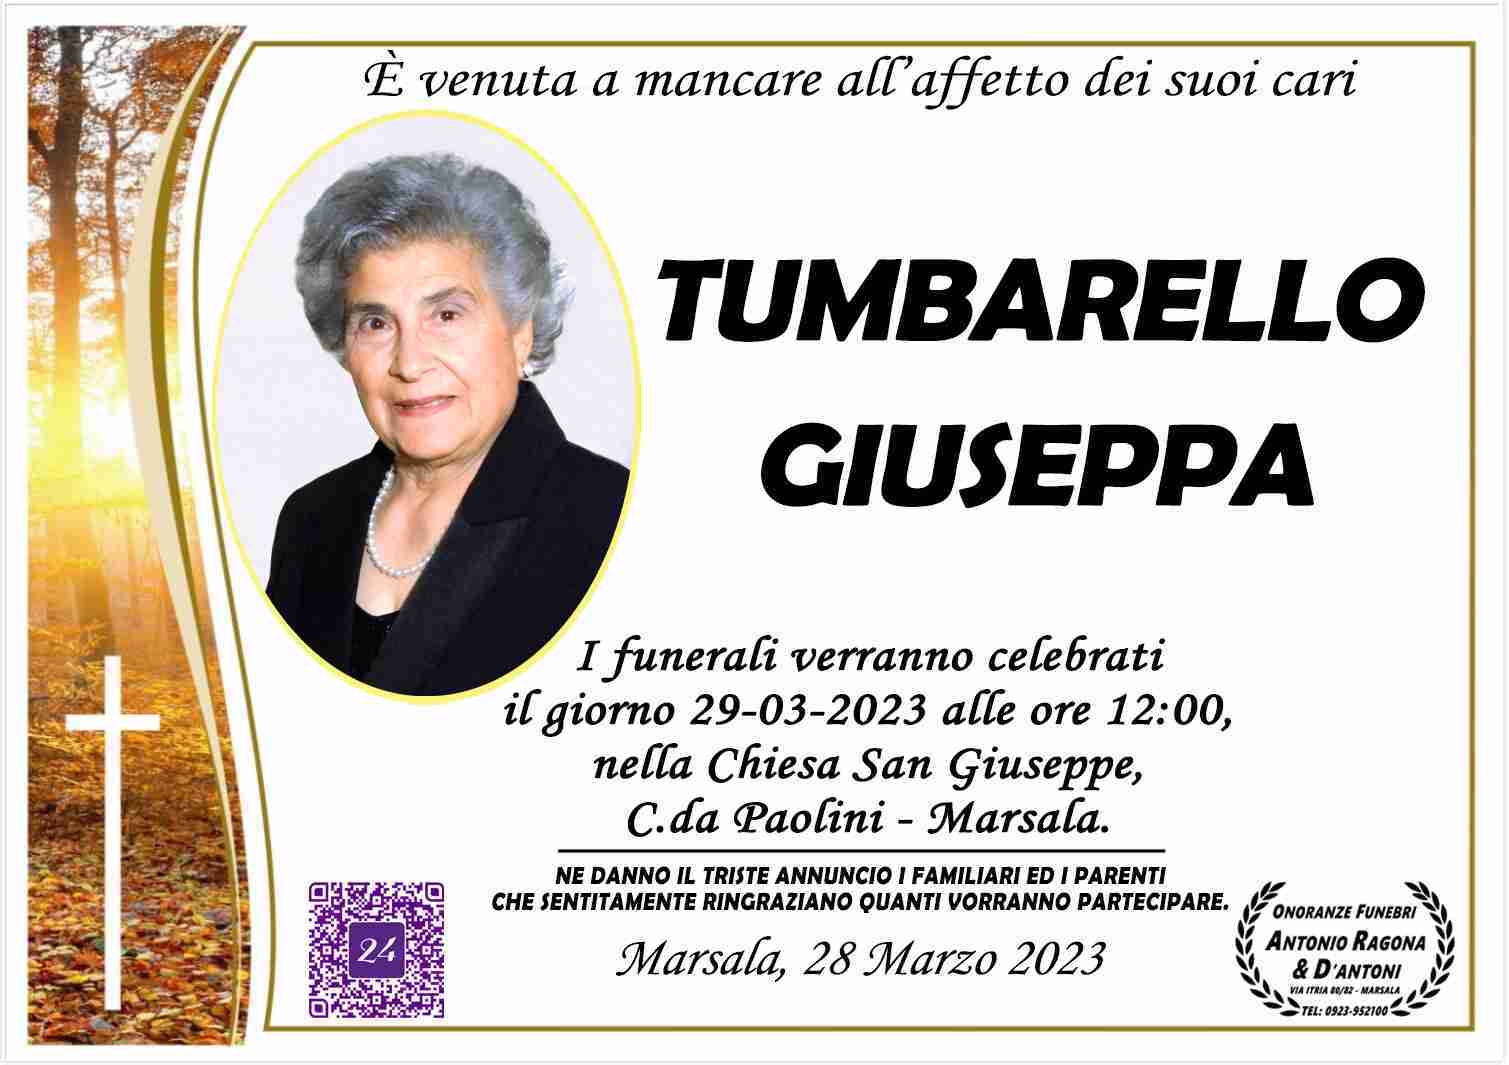 Giuseppa Tumbarello